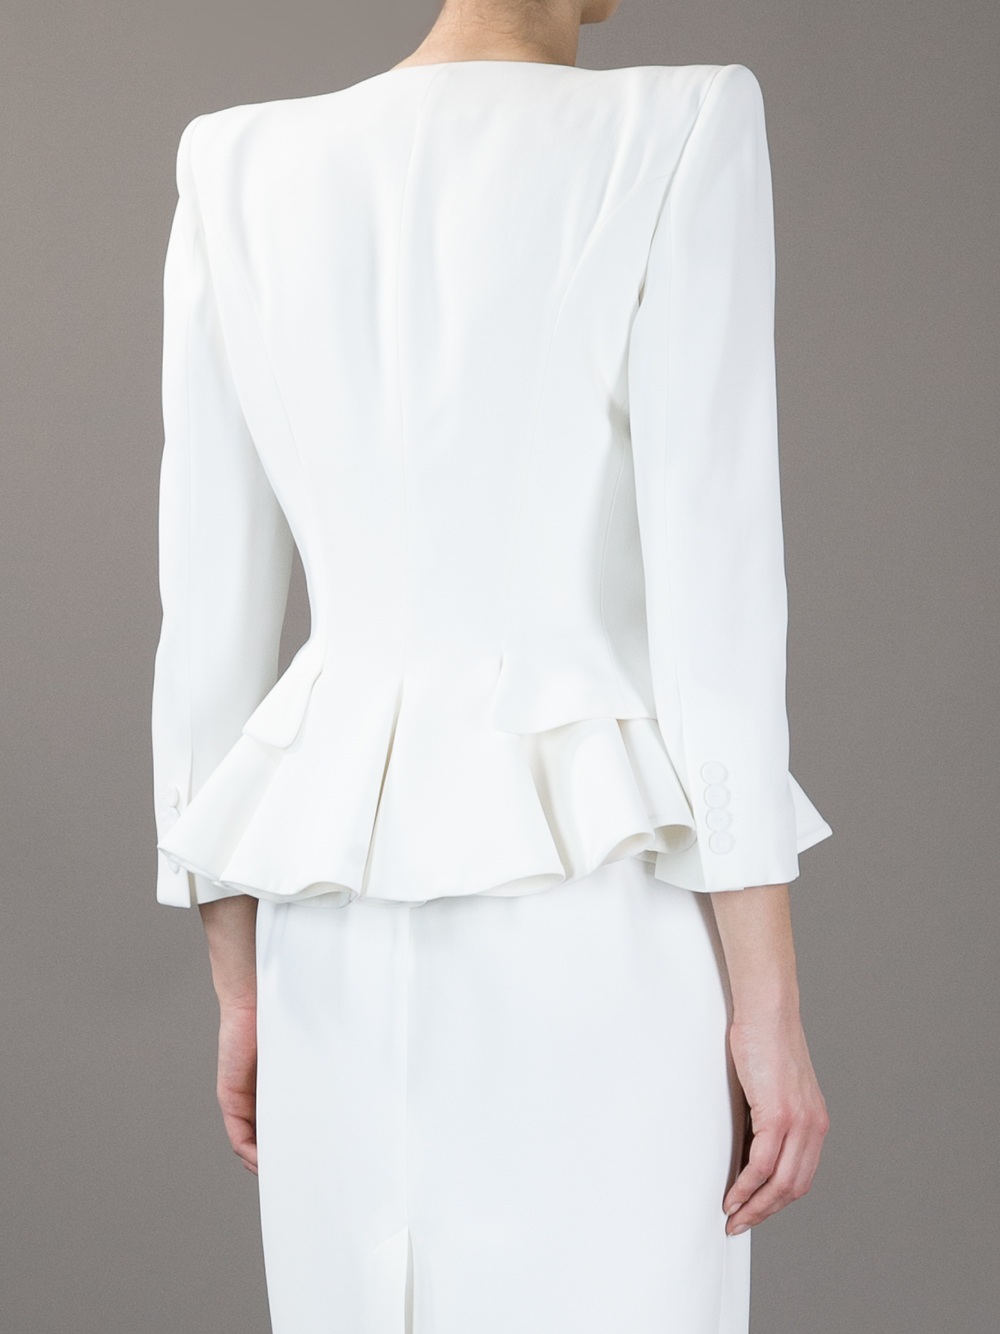 Alexander mcqueen Peplum Hem Jacket in White (ivory) | Lyst